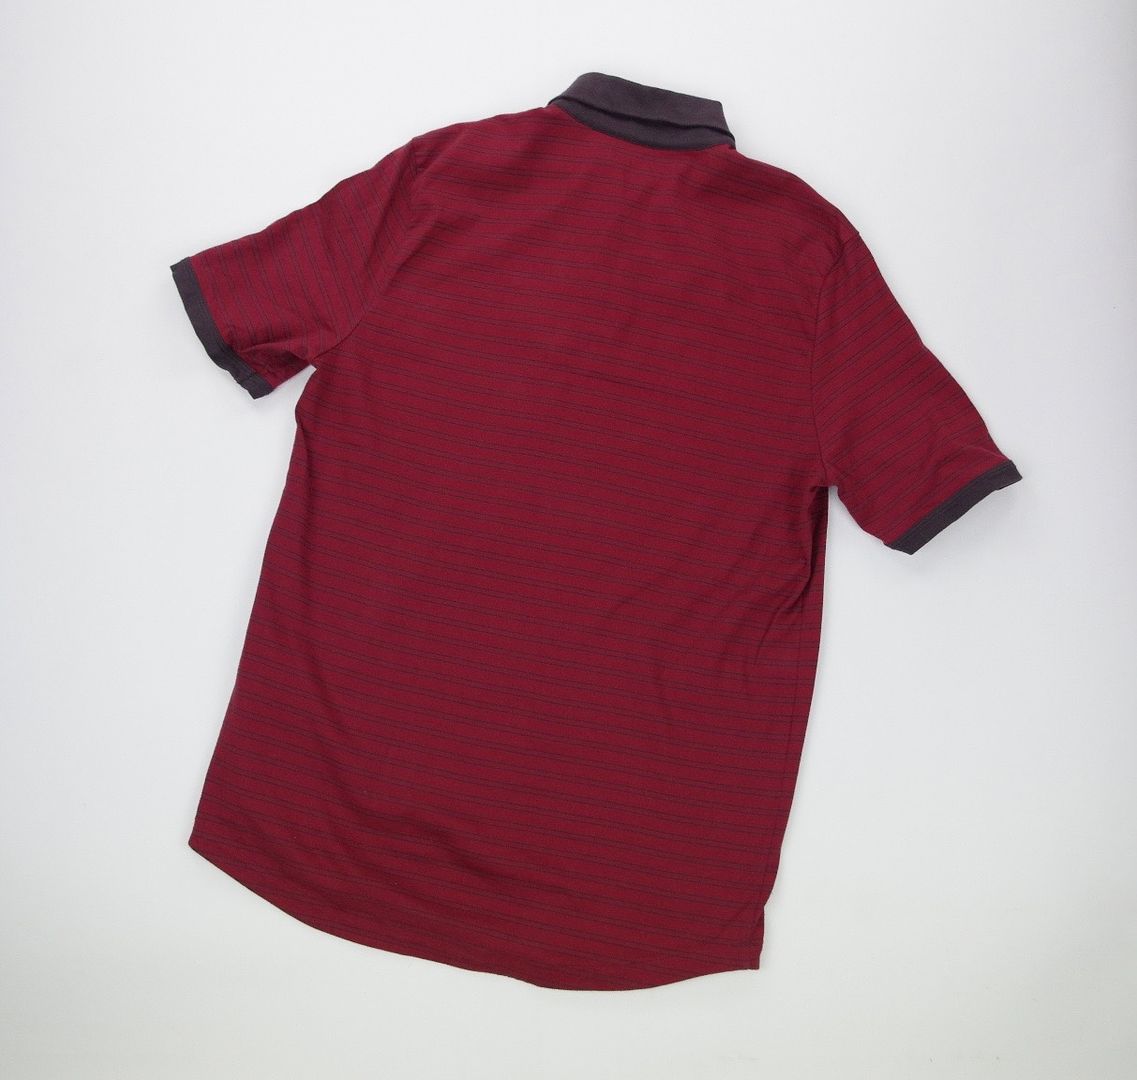 Louis Vuitton Polo Shirts Ebay | SEMA Data Co-op